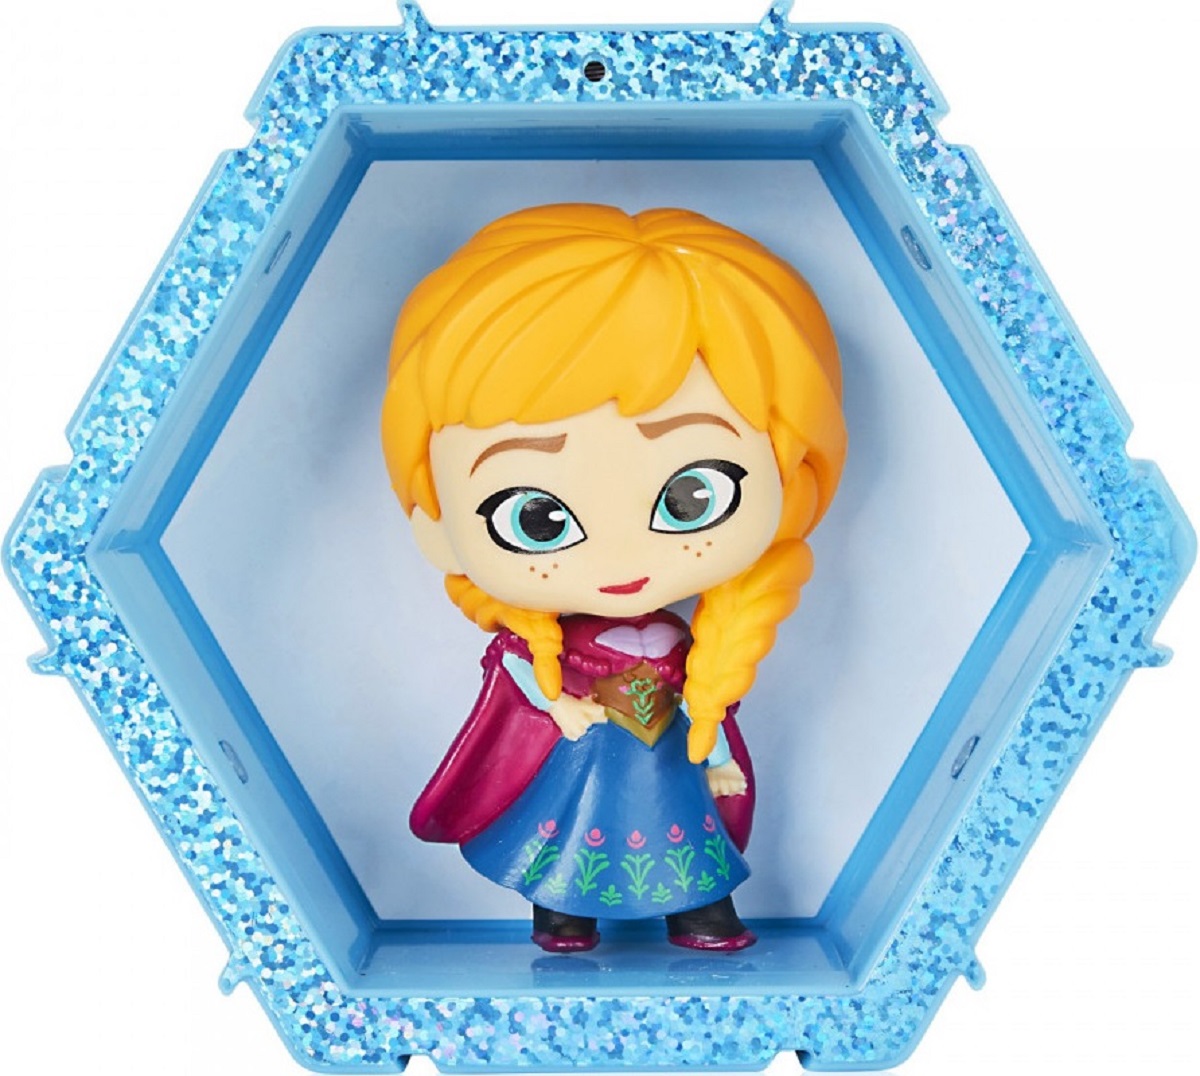 Figurina WOW! PODS: Disney Frozen. Anna